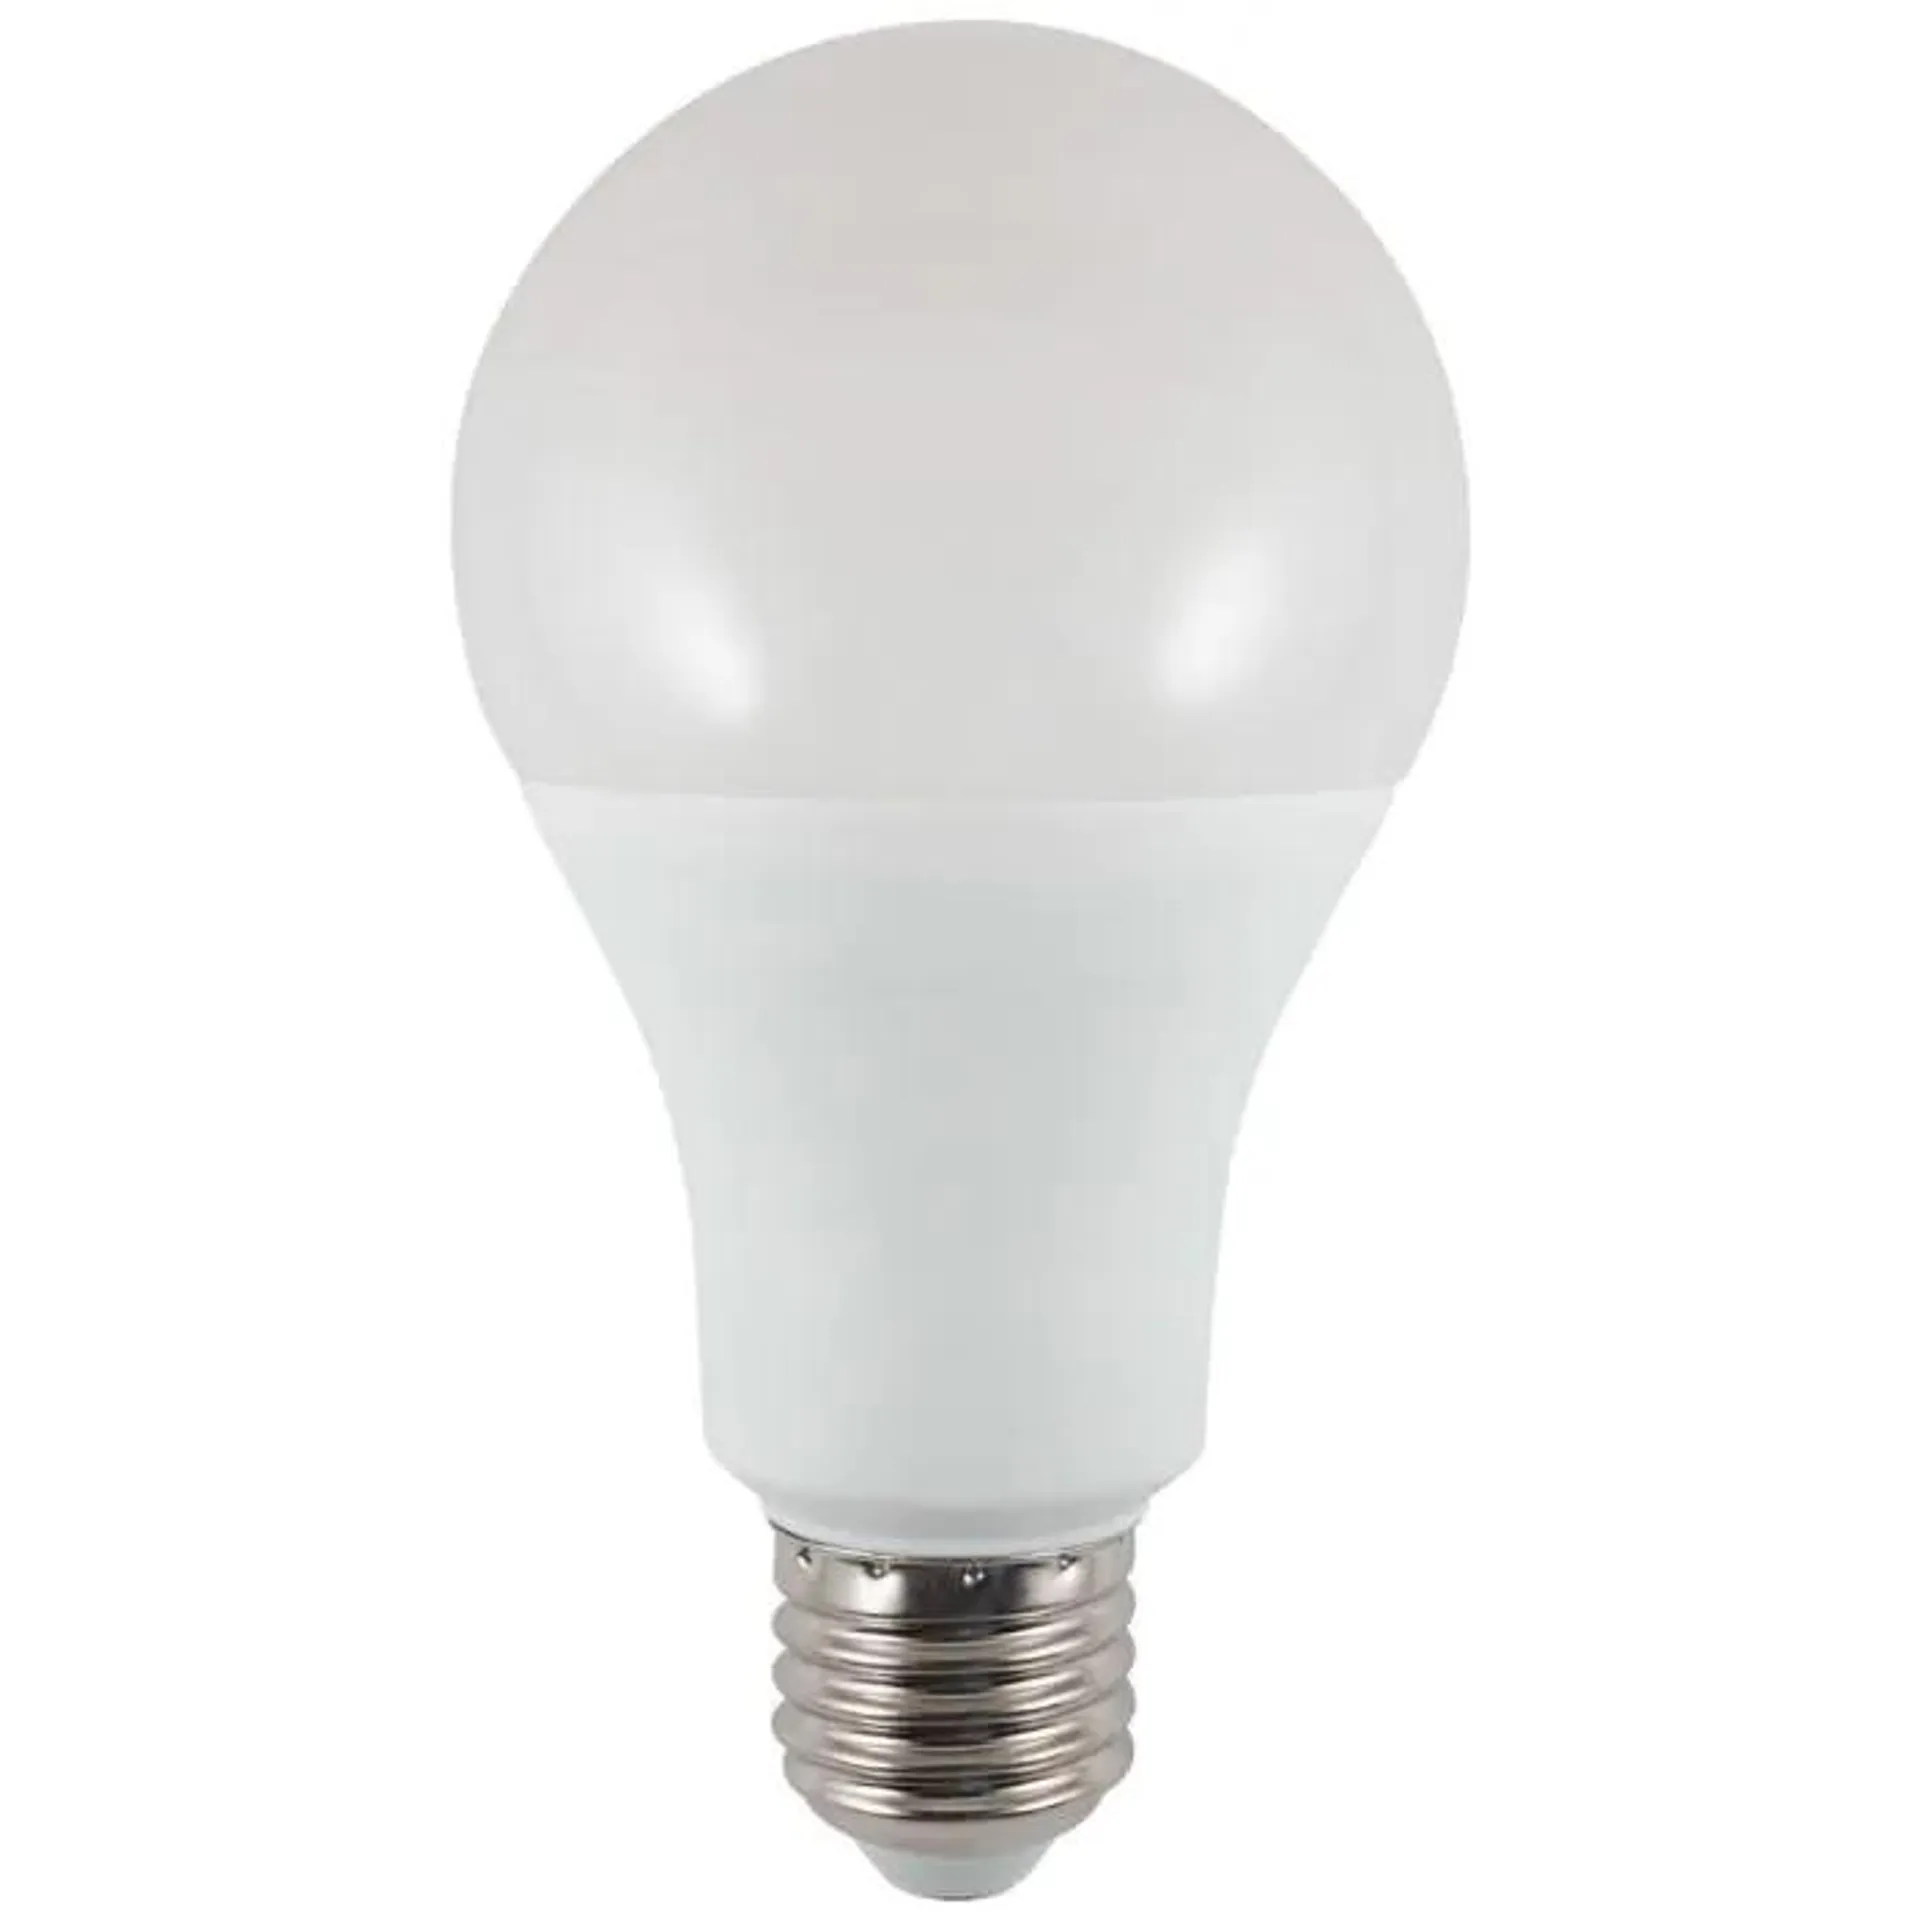 15W Large LED ES E27 Light Bulb, Daylight White